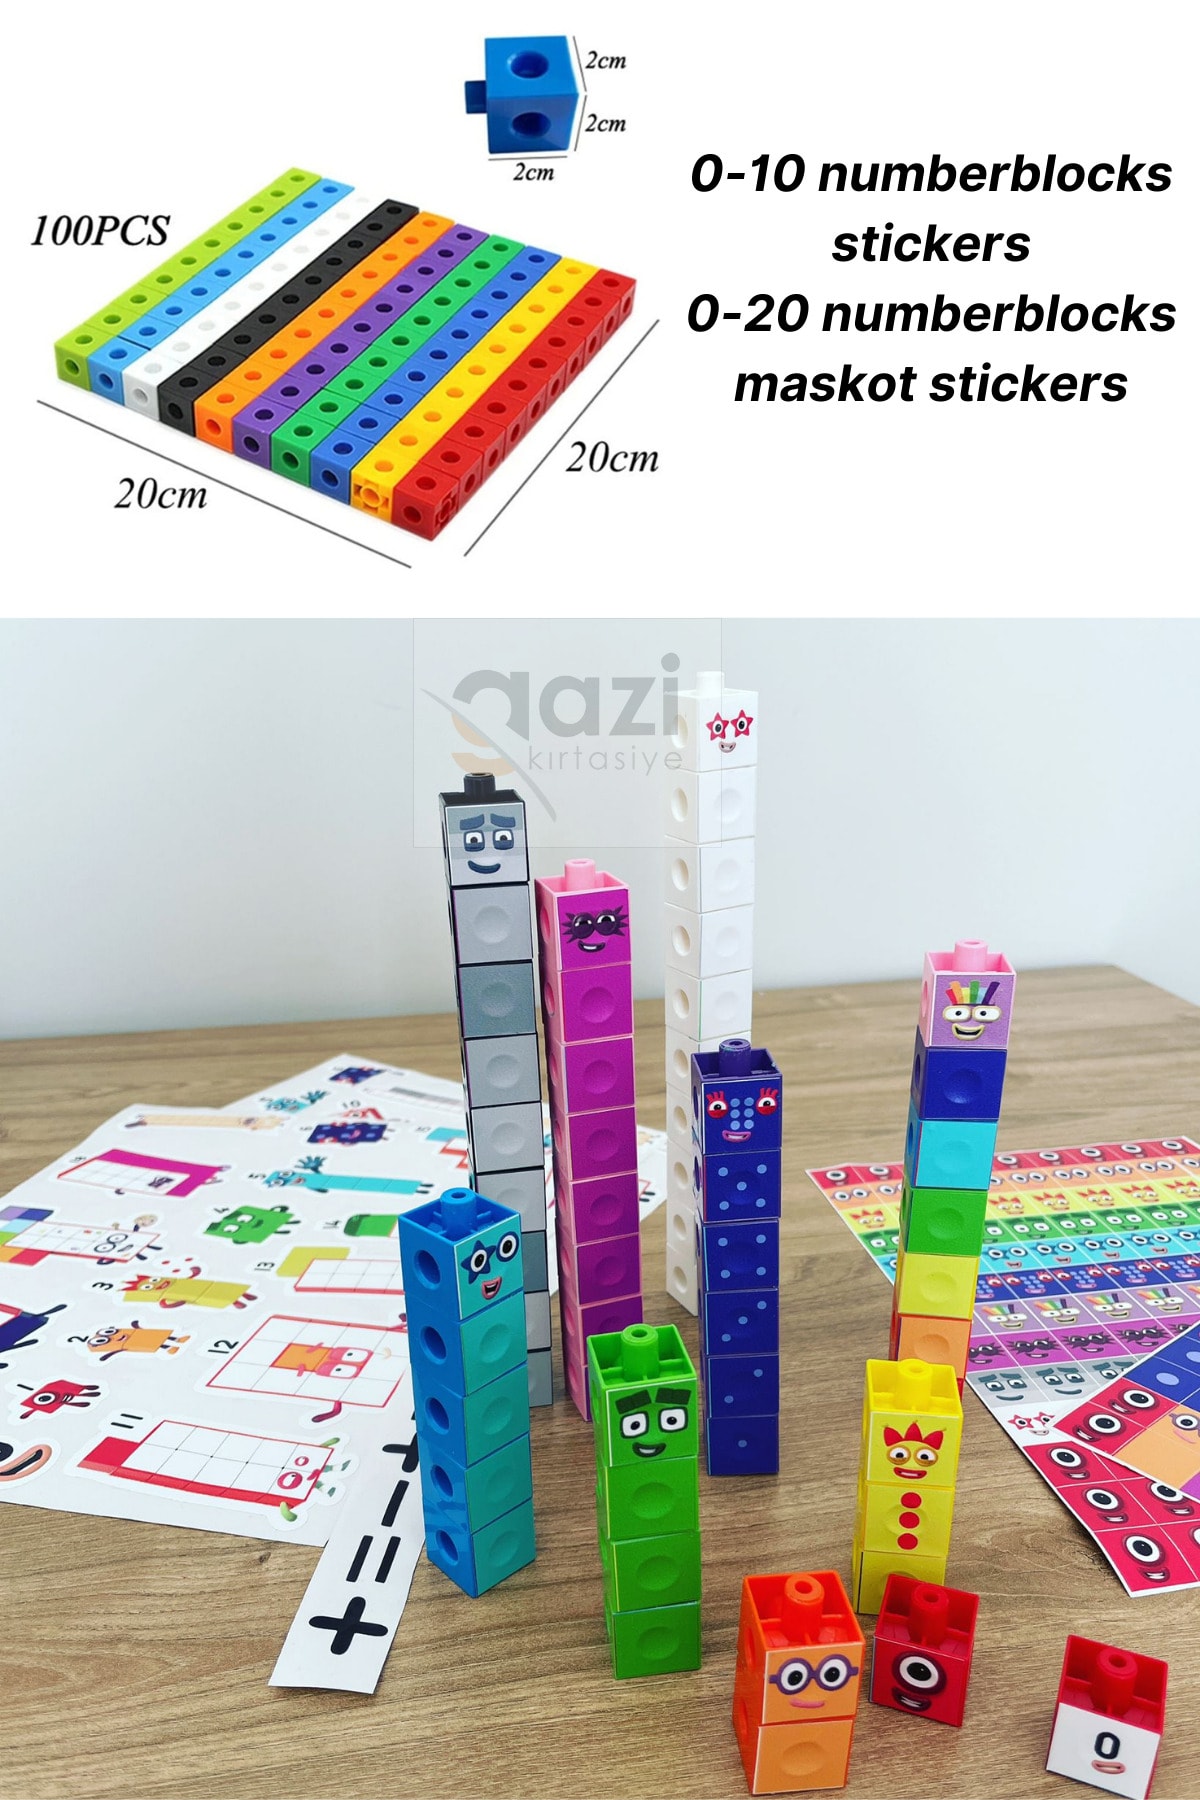 Gazi Kırtasiye Numberblocks 100 Parça Geçmeli Matematik Küpleri - Snapcubes / 0-10 Stickers Ve 0-20 Maskot Stickers